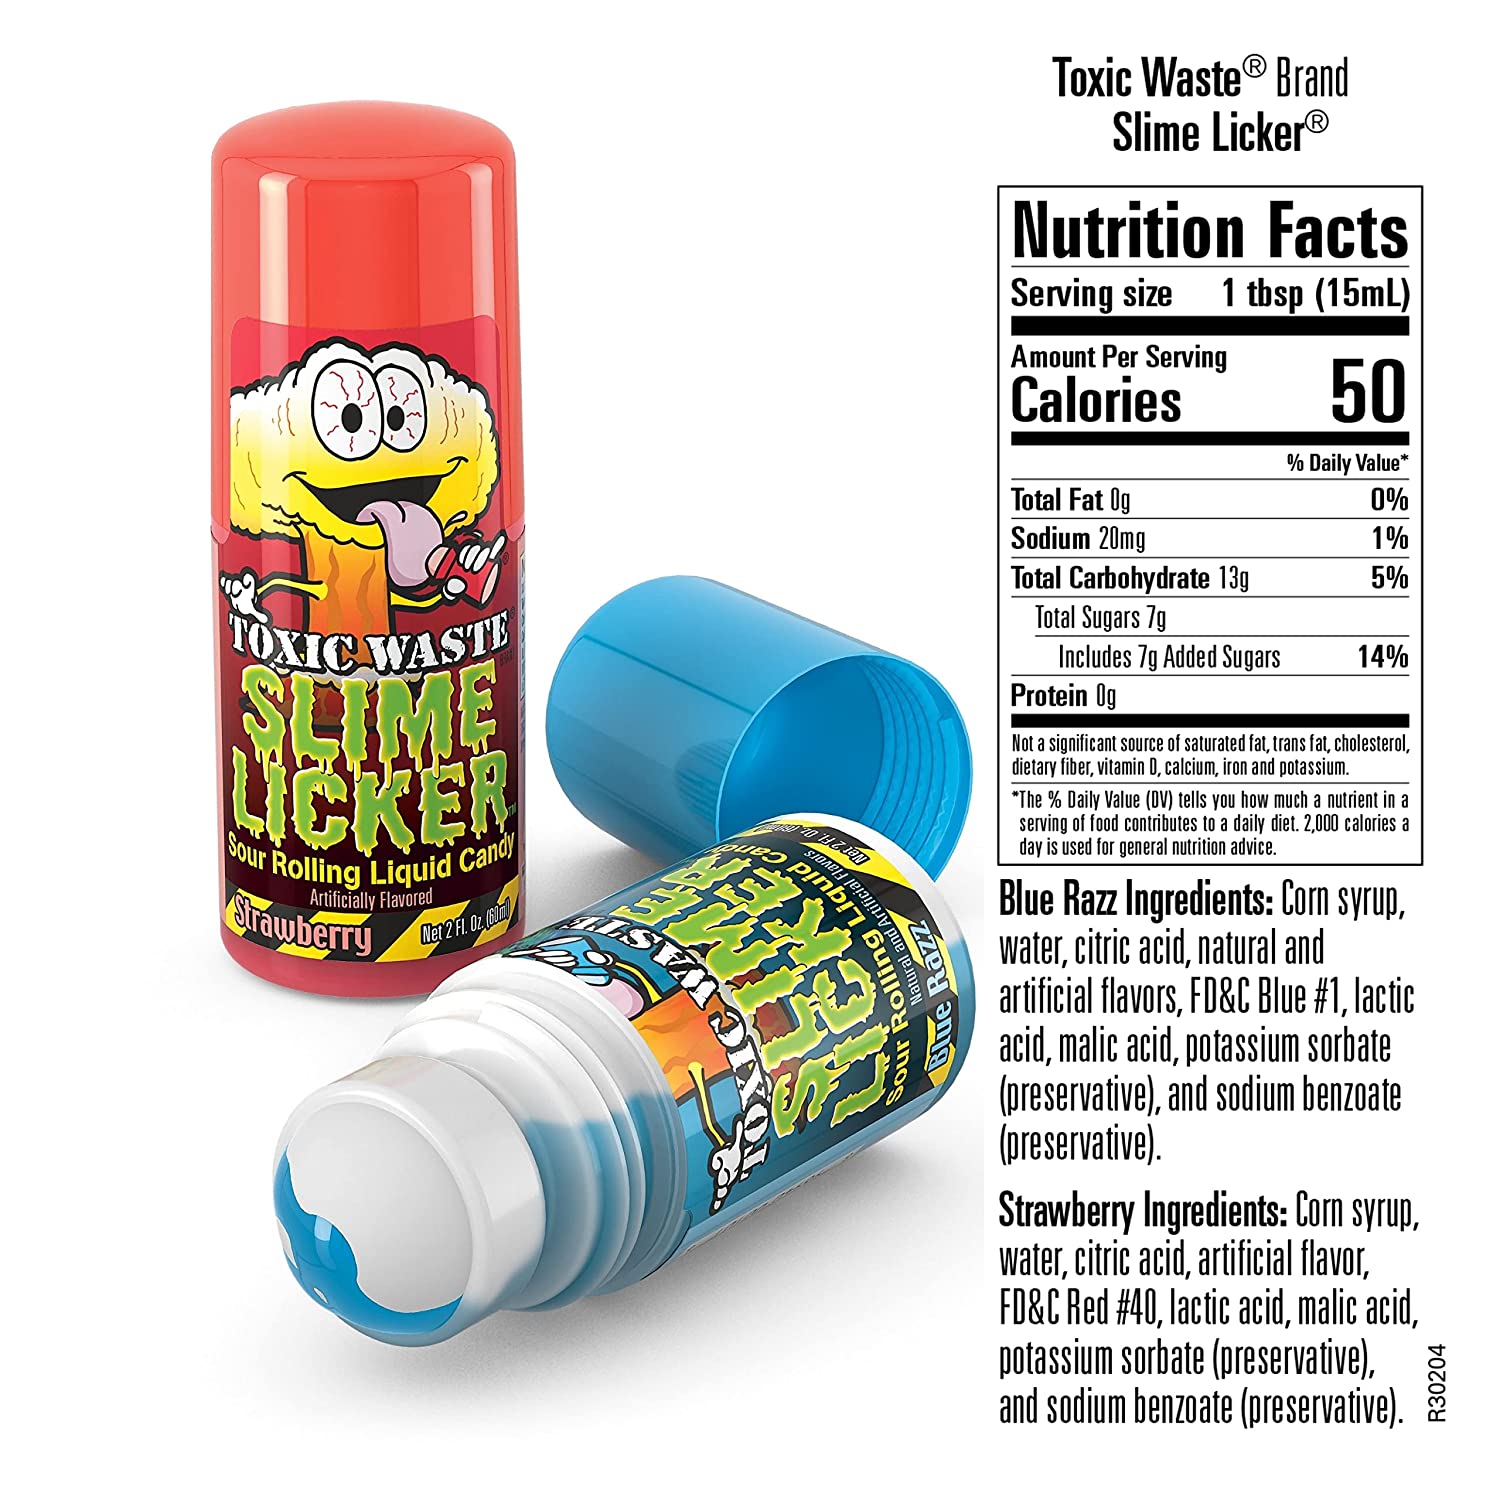 Toxic Waste Slime Licker – Blue Seven